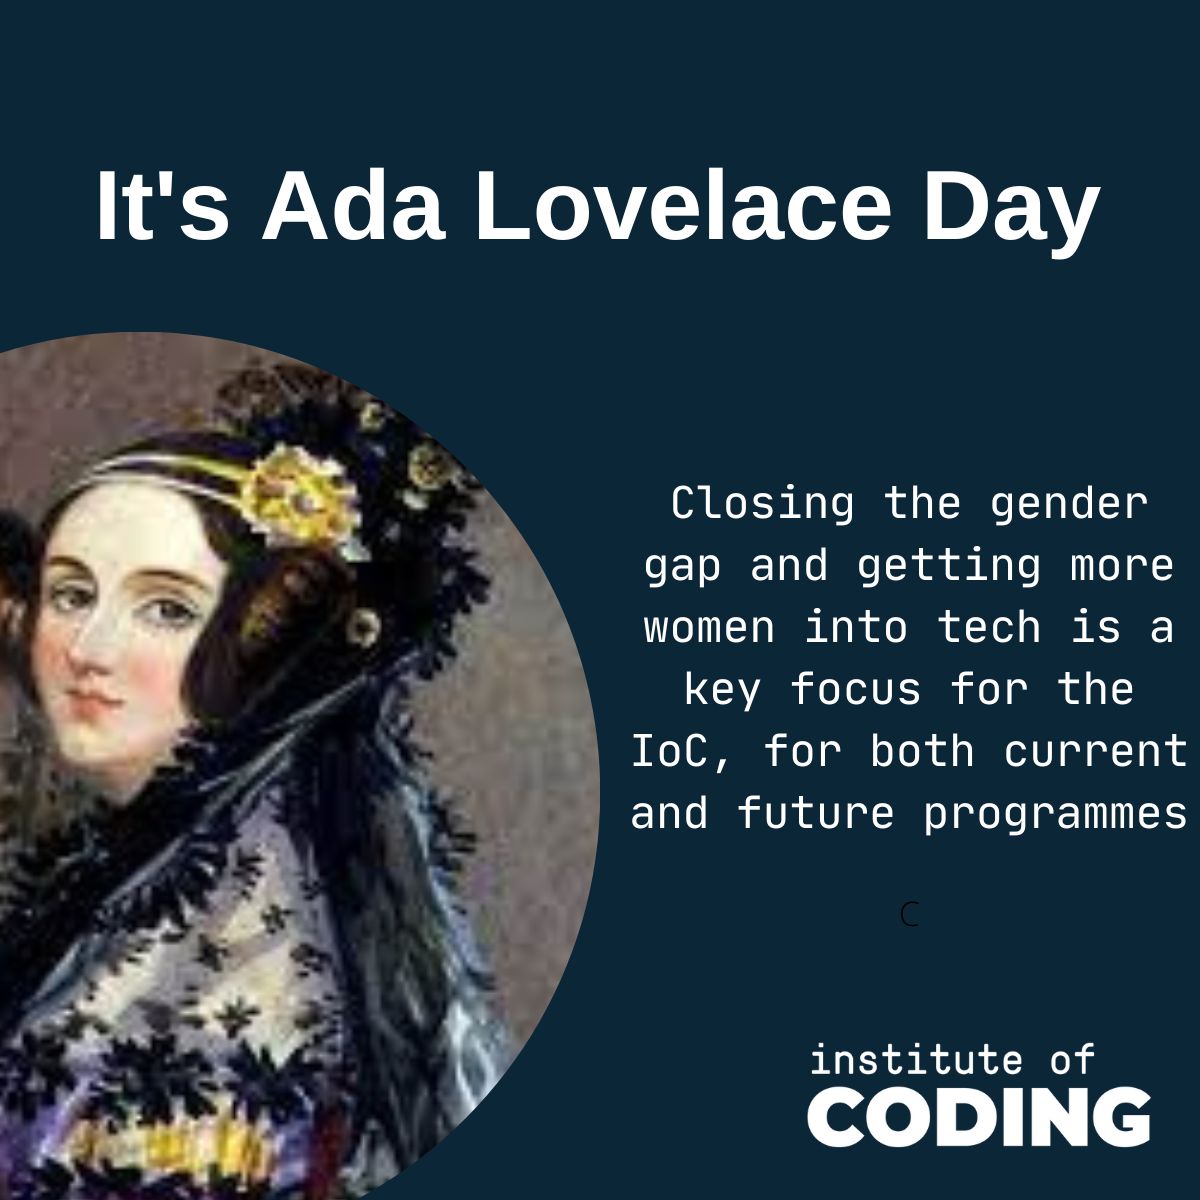 It's Ada Lovelace Day! If you didn't know already, it's an international celebration of the achievements of women in STEM @FindingAda #WomenInTech #STEM